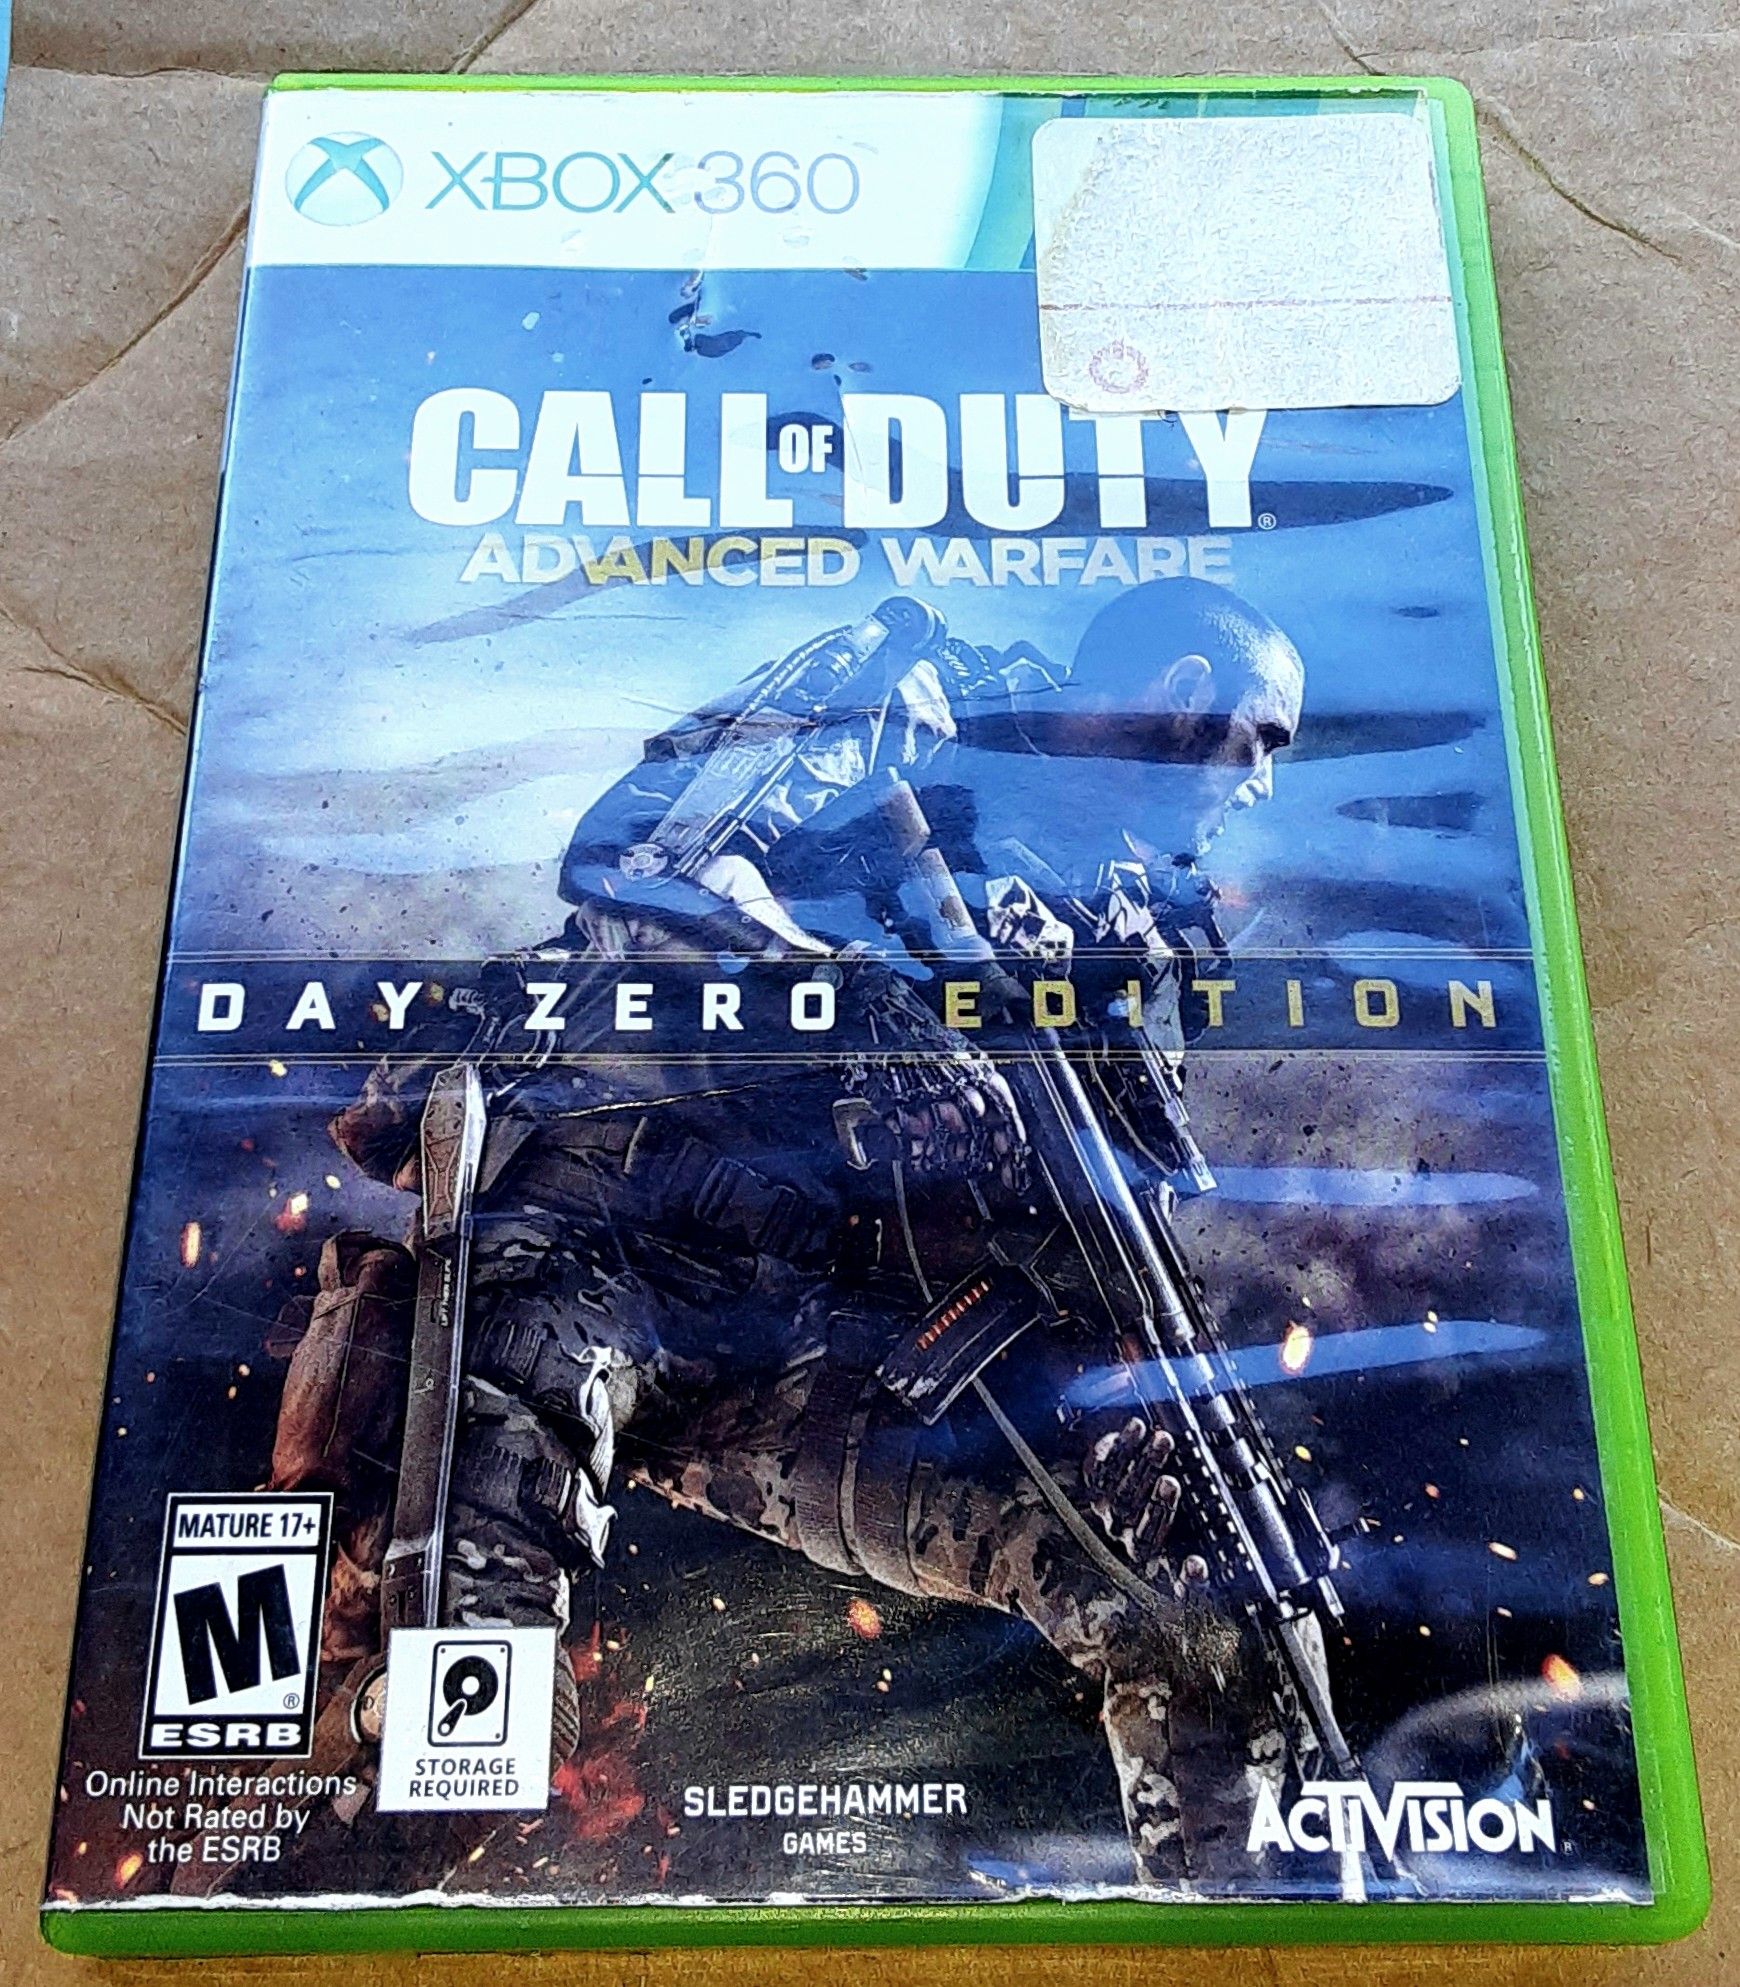 Xbox 360 Call of Duty Advance Warfare video game..